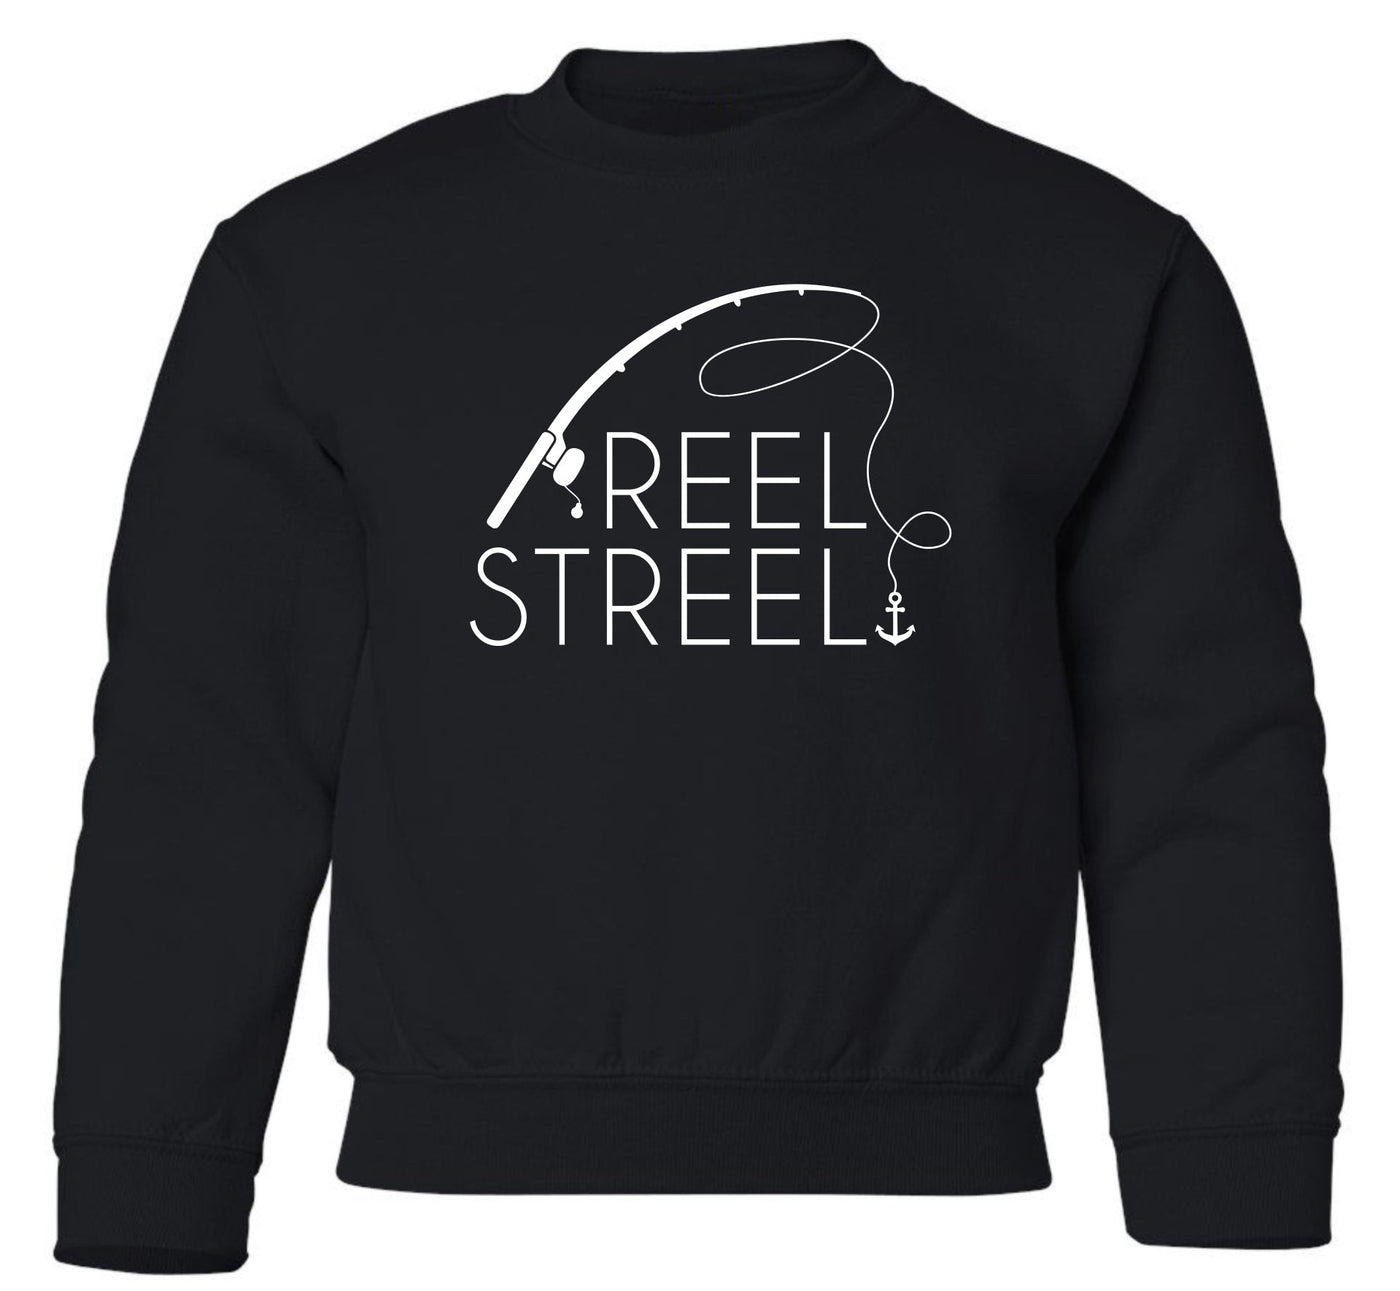 "Reel Streel" Toddler/Youth Crewneck Sweatshirt